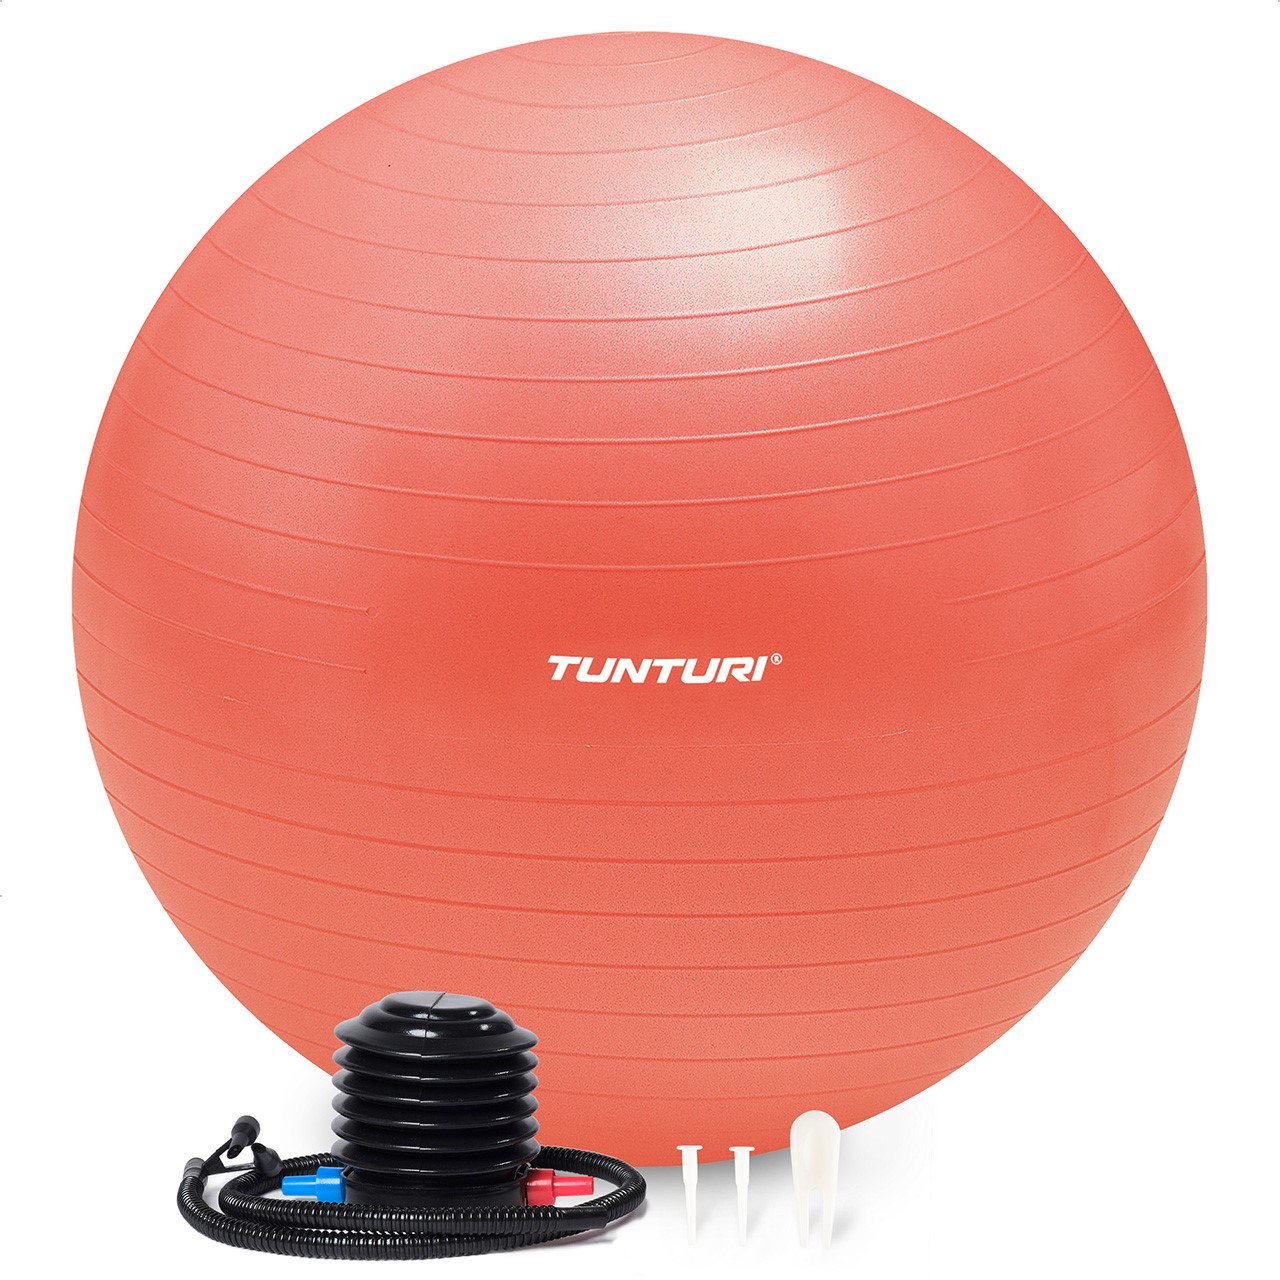 Tunturi Gym Ball - Fitnessball reissfest ABS 65 cm Orange